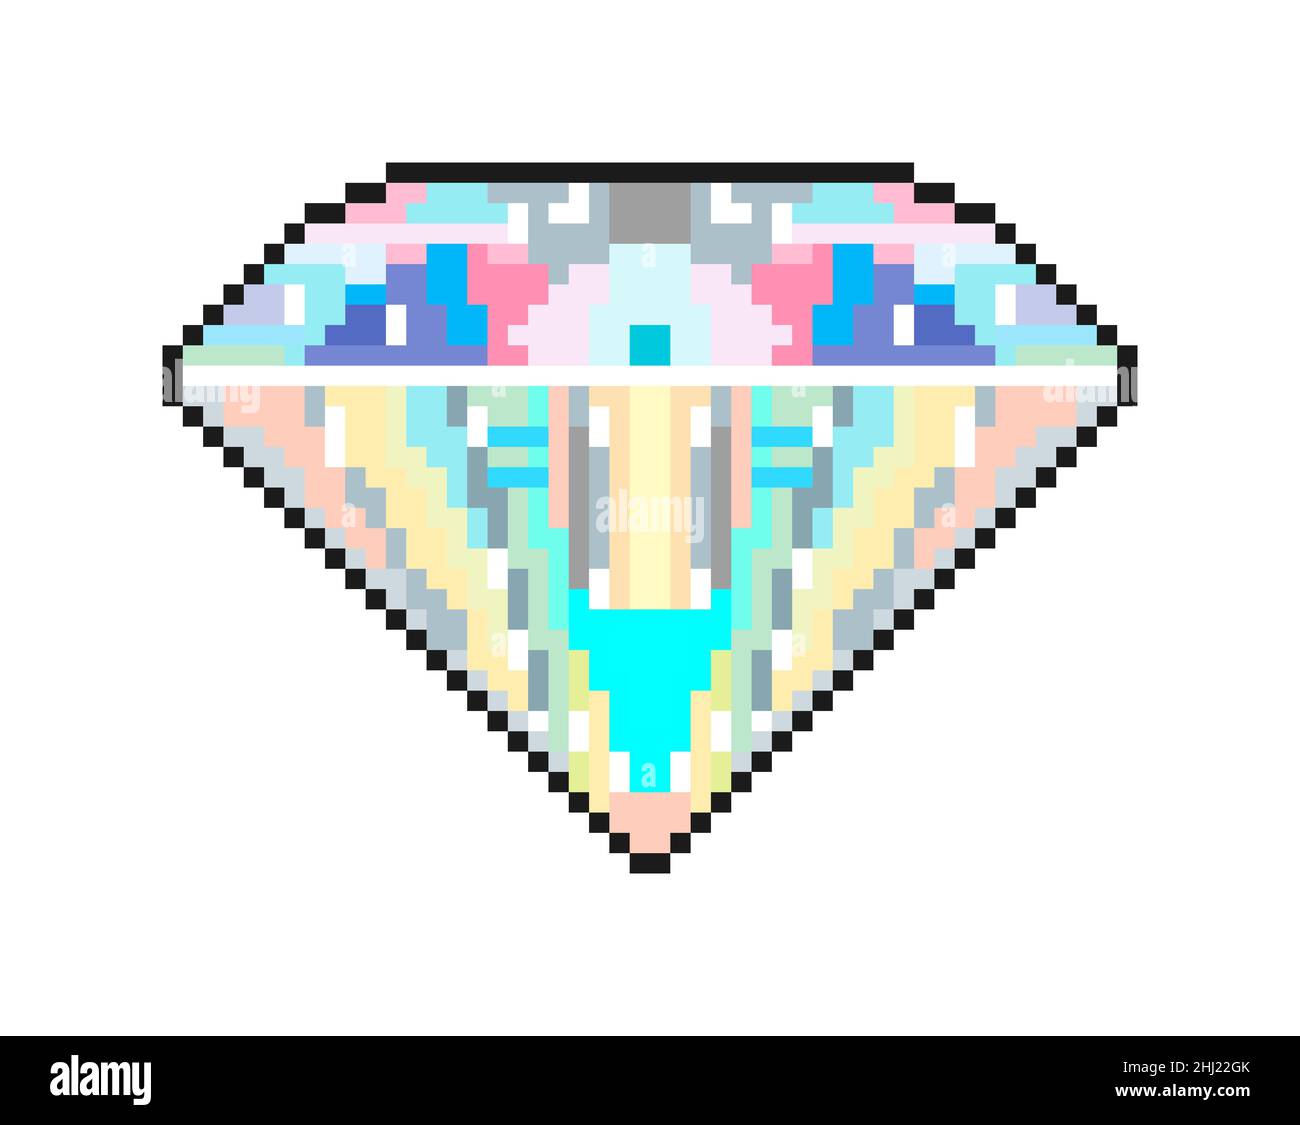 Pixel art: a shiny diamond gem. Stock Photo